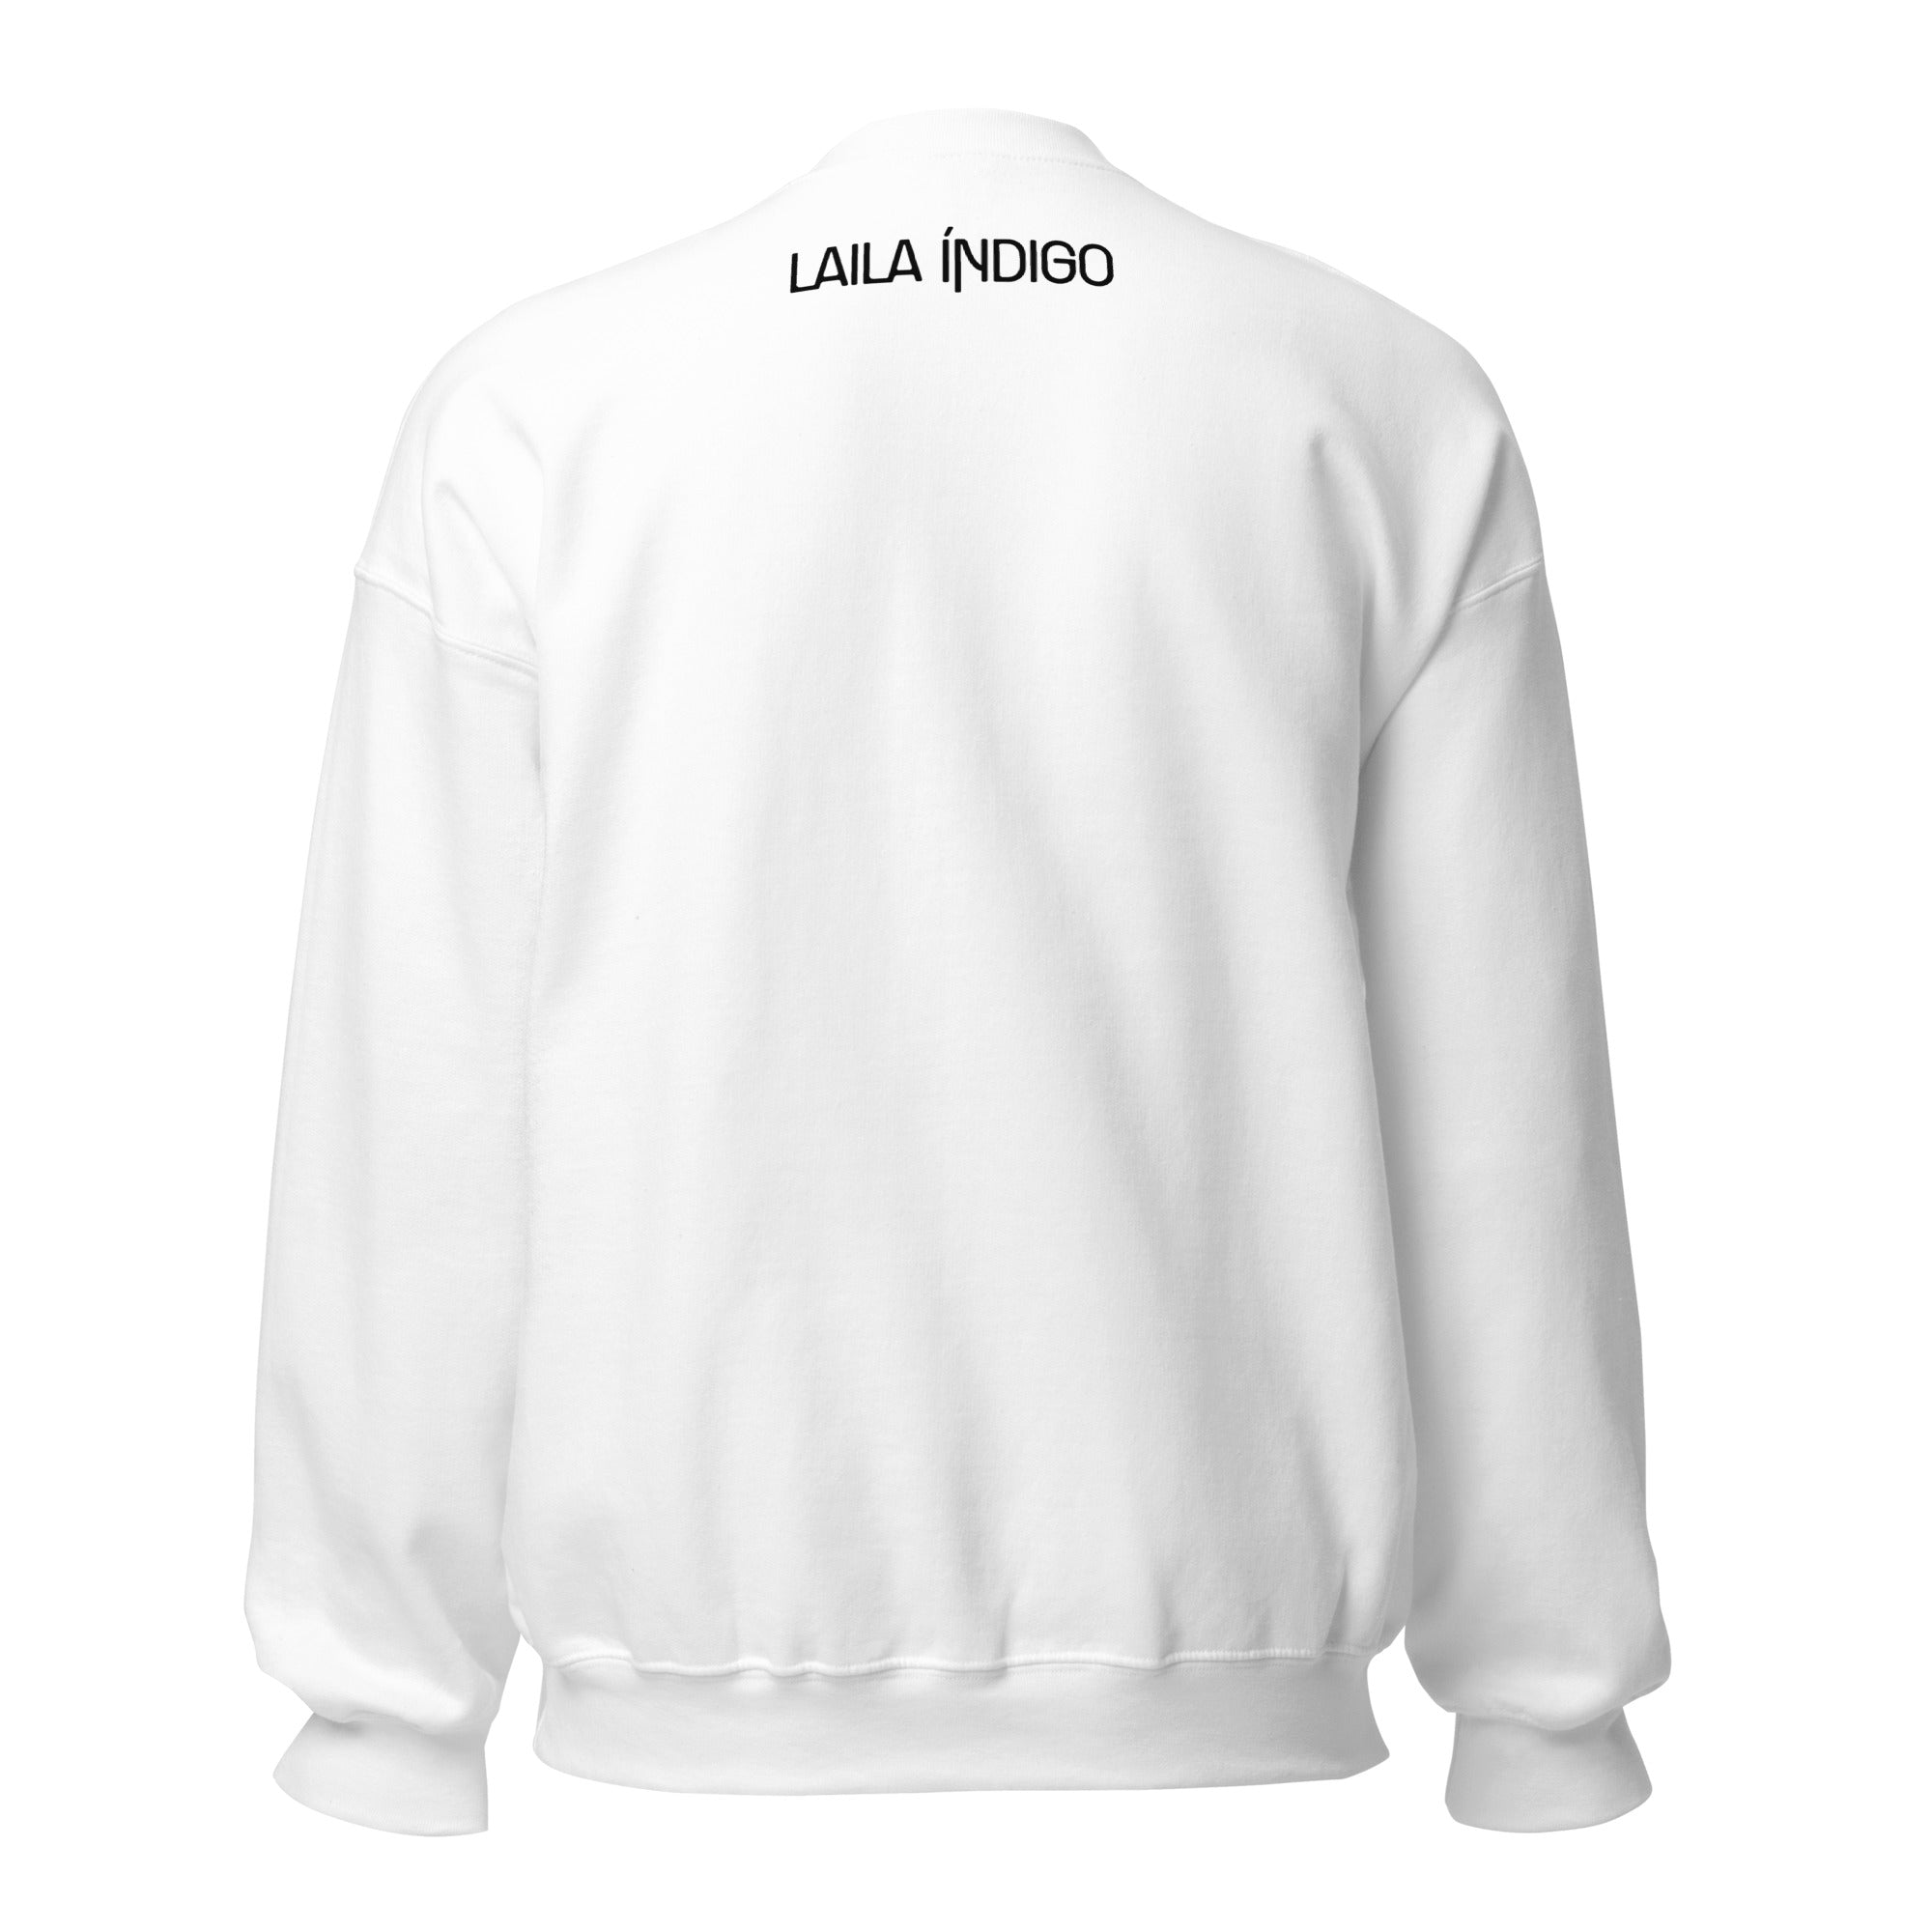 Laila Indigo - Sweatshirt